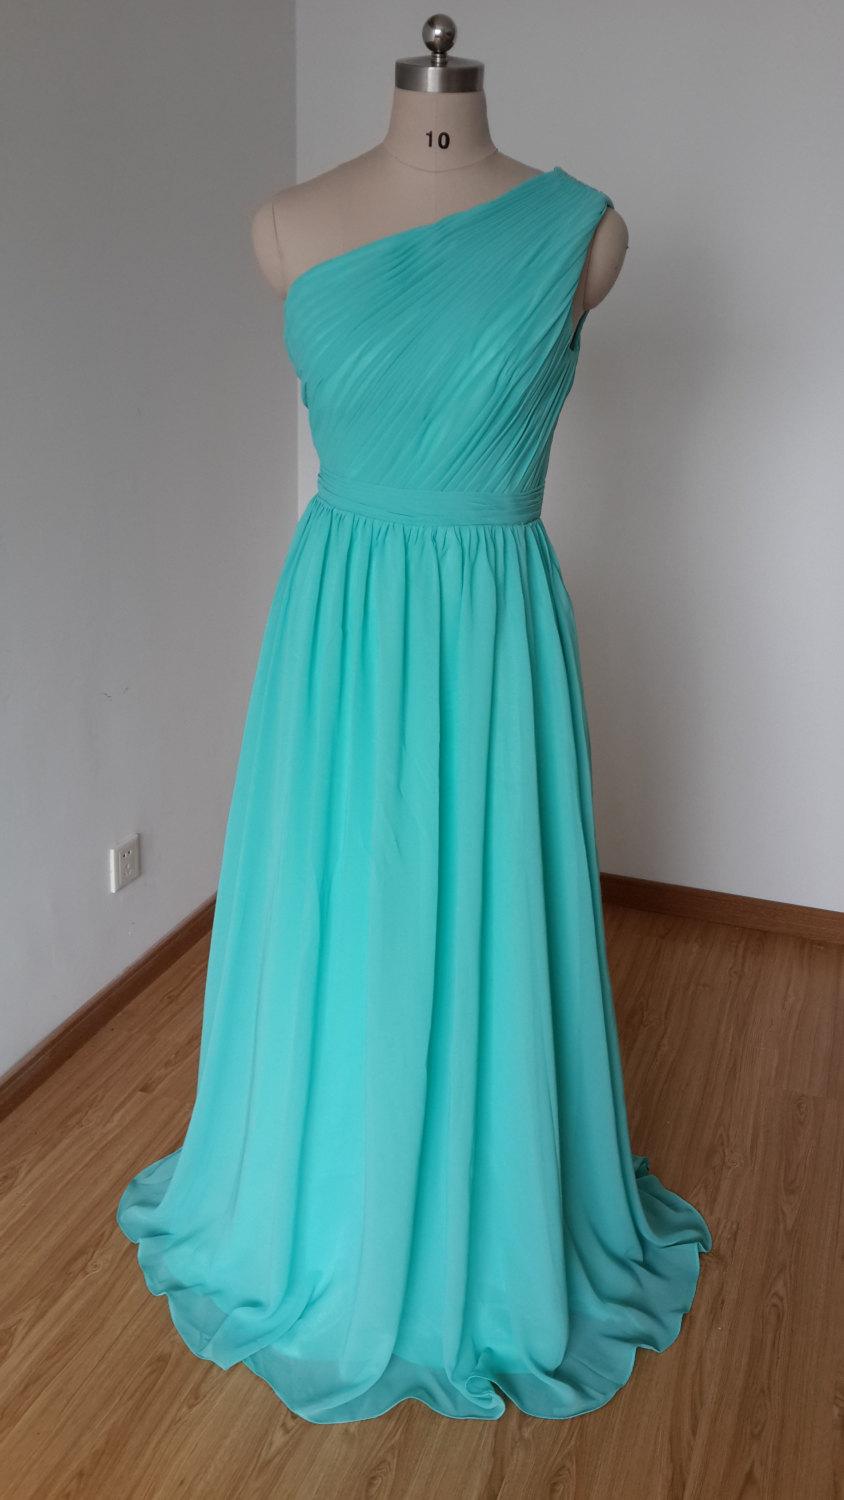 Mariage - 2015 One-shoulder Turquoise Chiffon Long Bridesmaid Dress